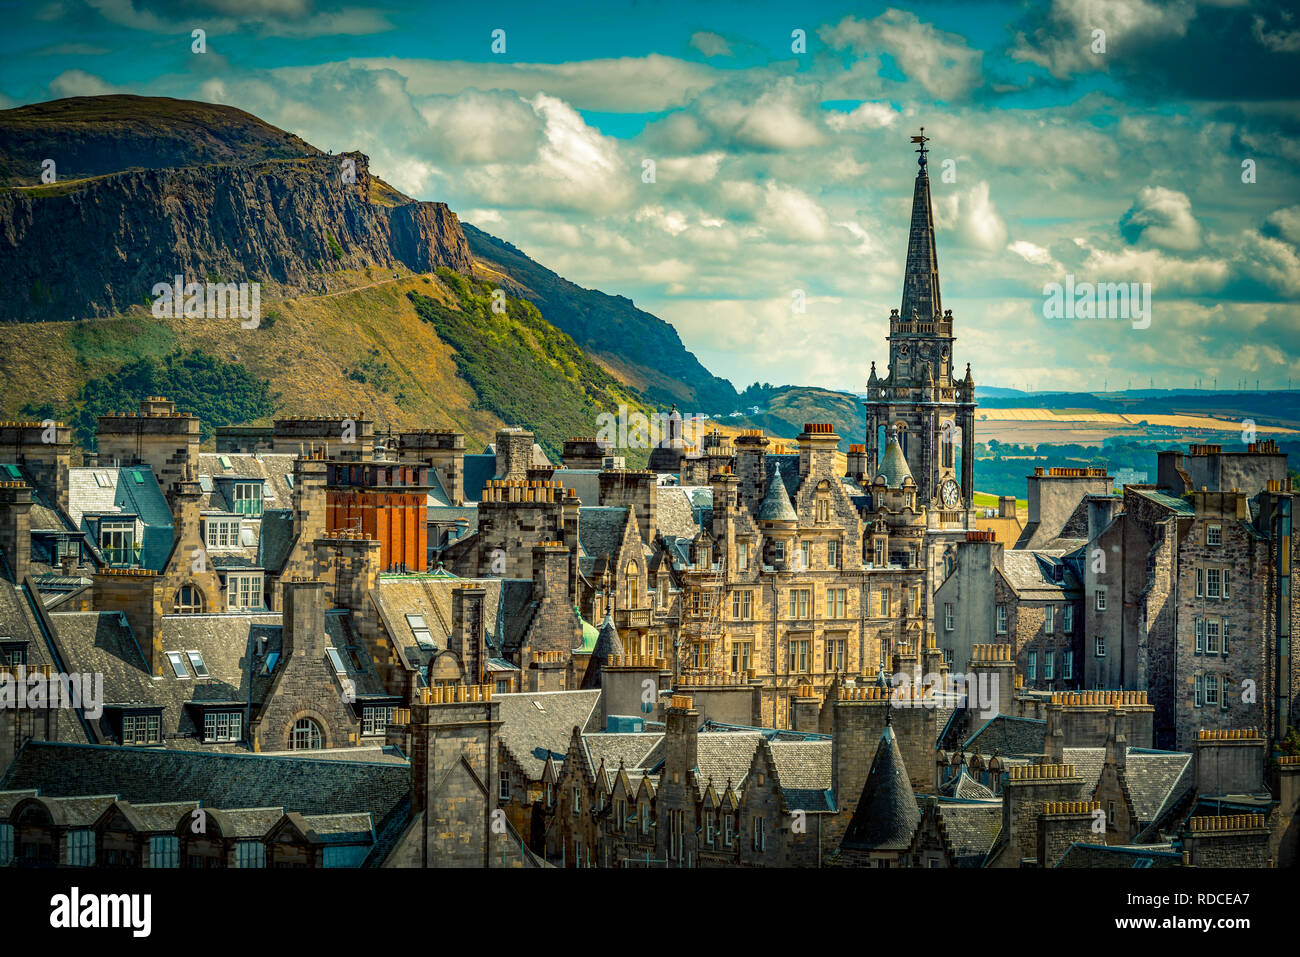 Europa, Großbritannien, Schottland, Edimburgo, Aussichtspunkt, Scott Monument, Holyrood Park, Salisbury Crags Foto de stock